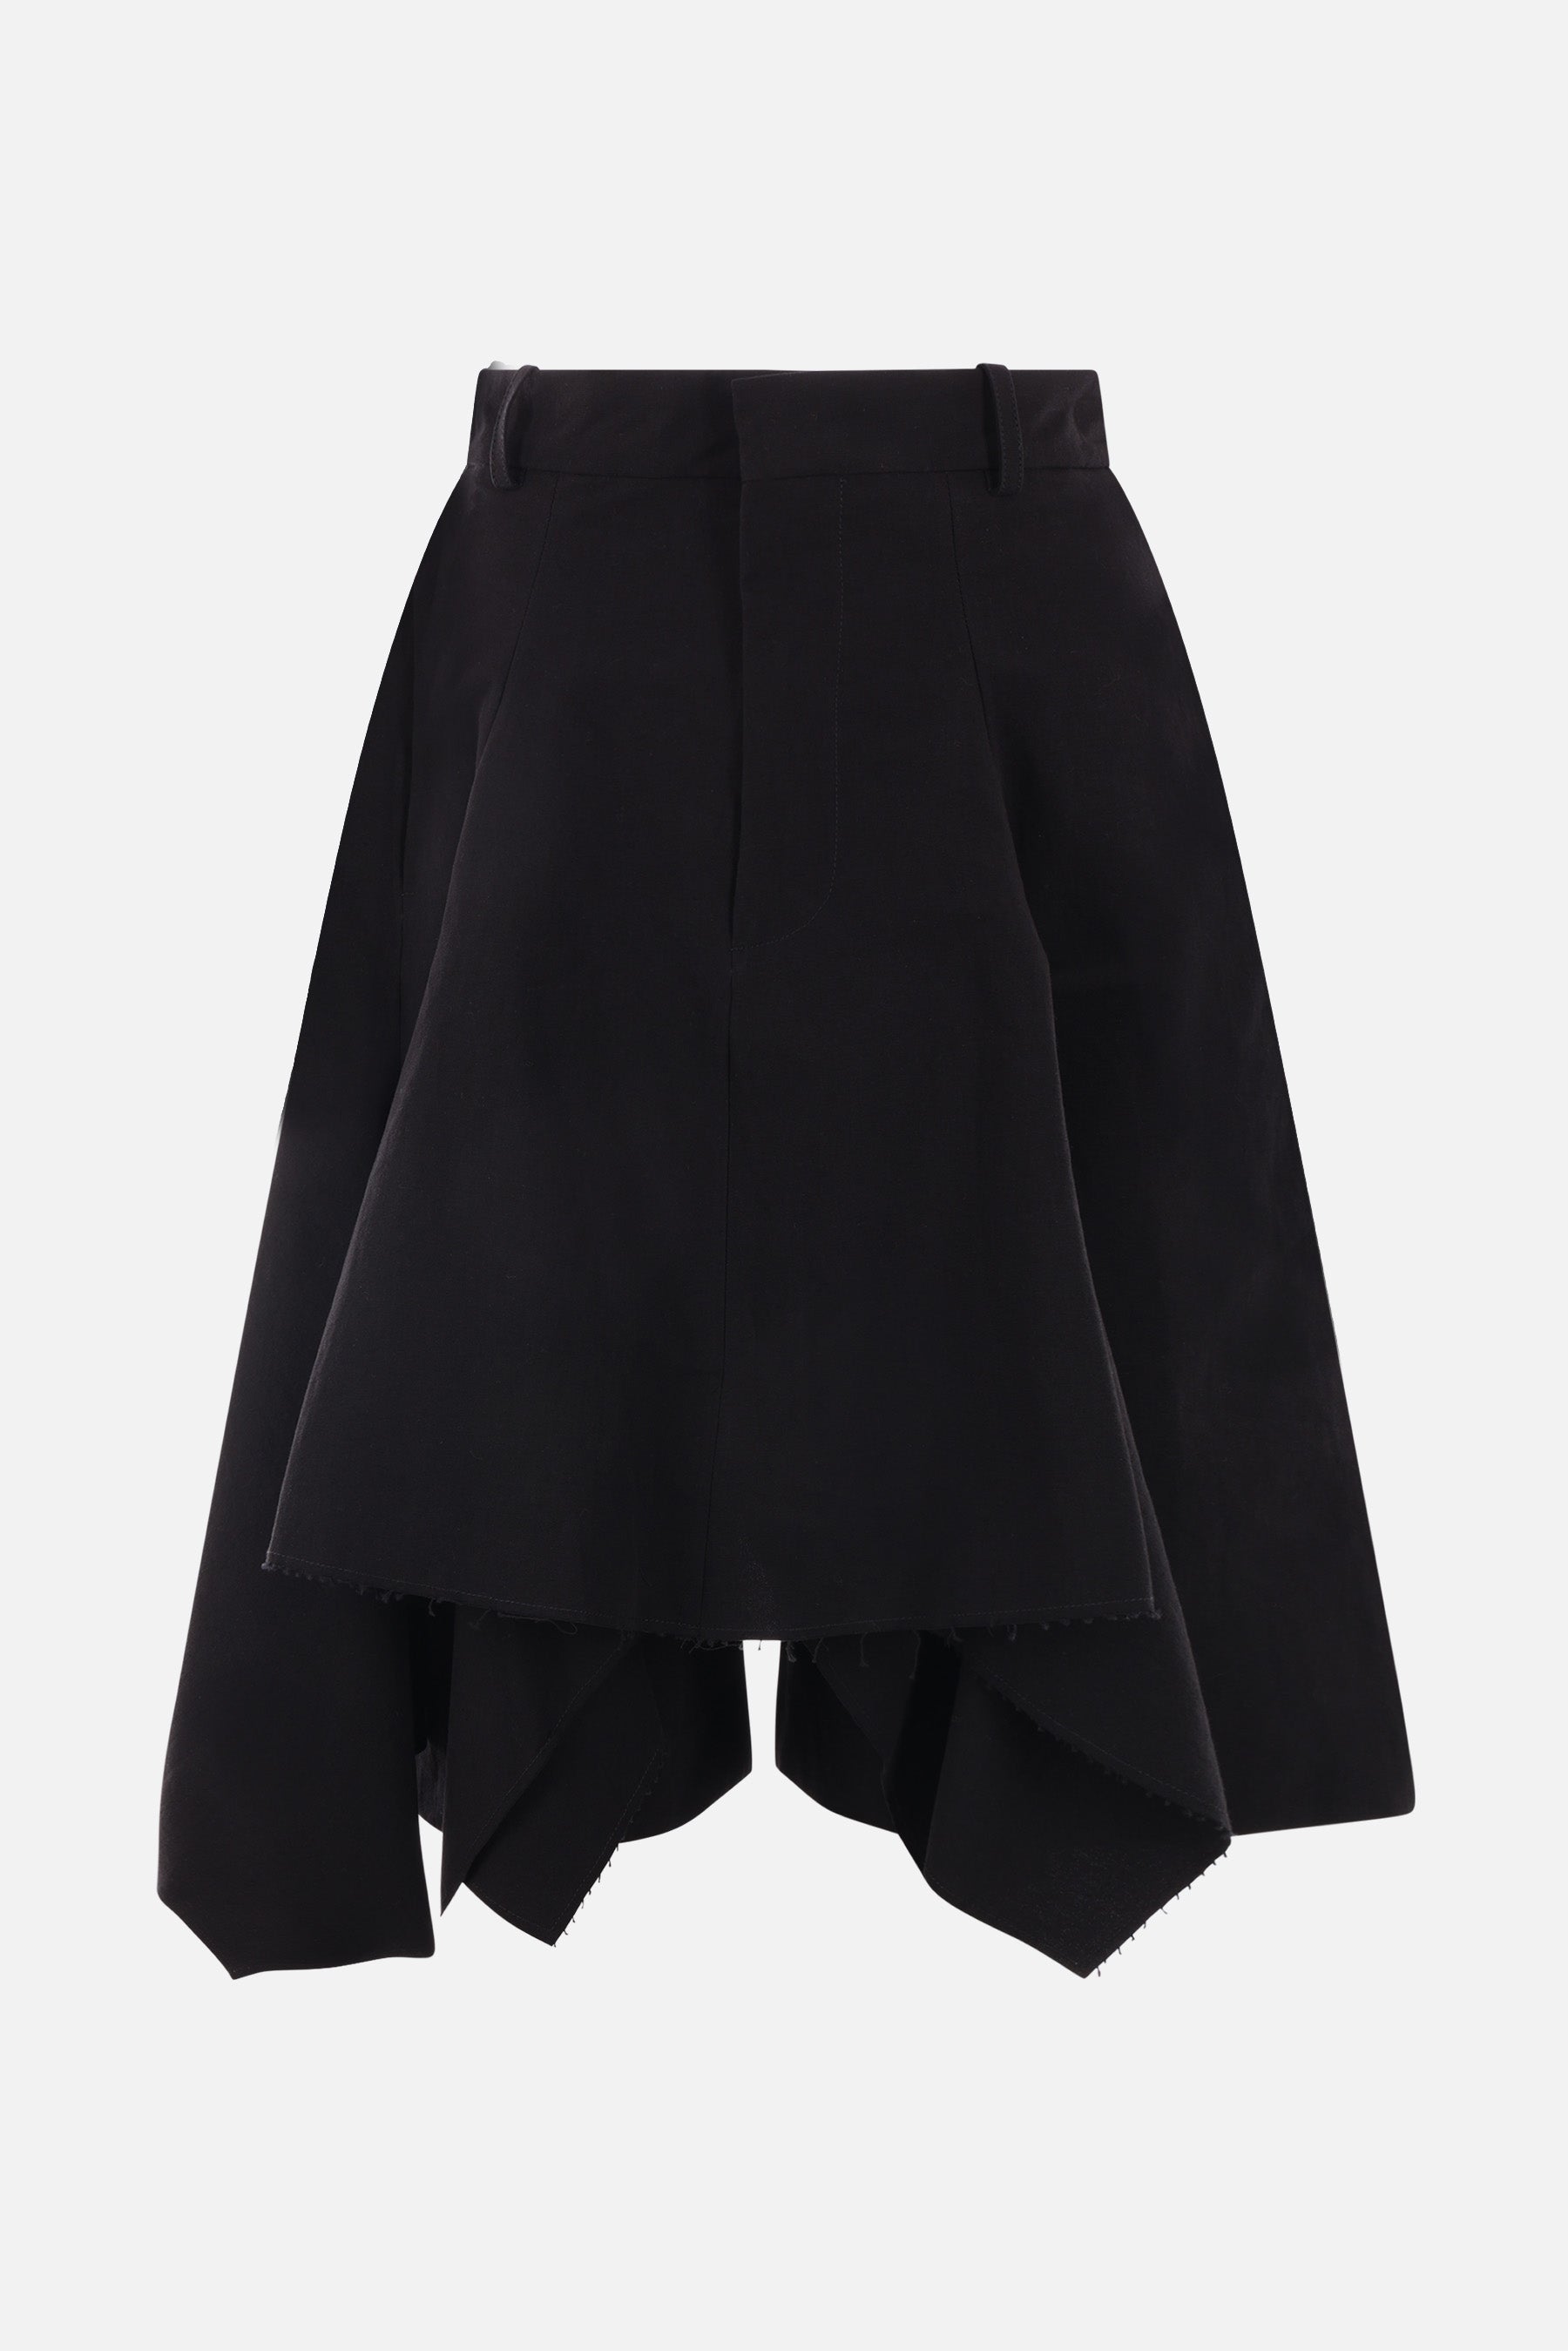 Nave technical cotton short pants / skirt